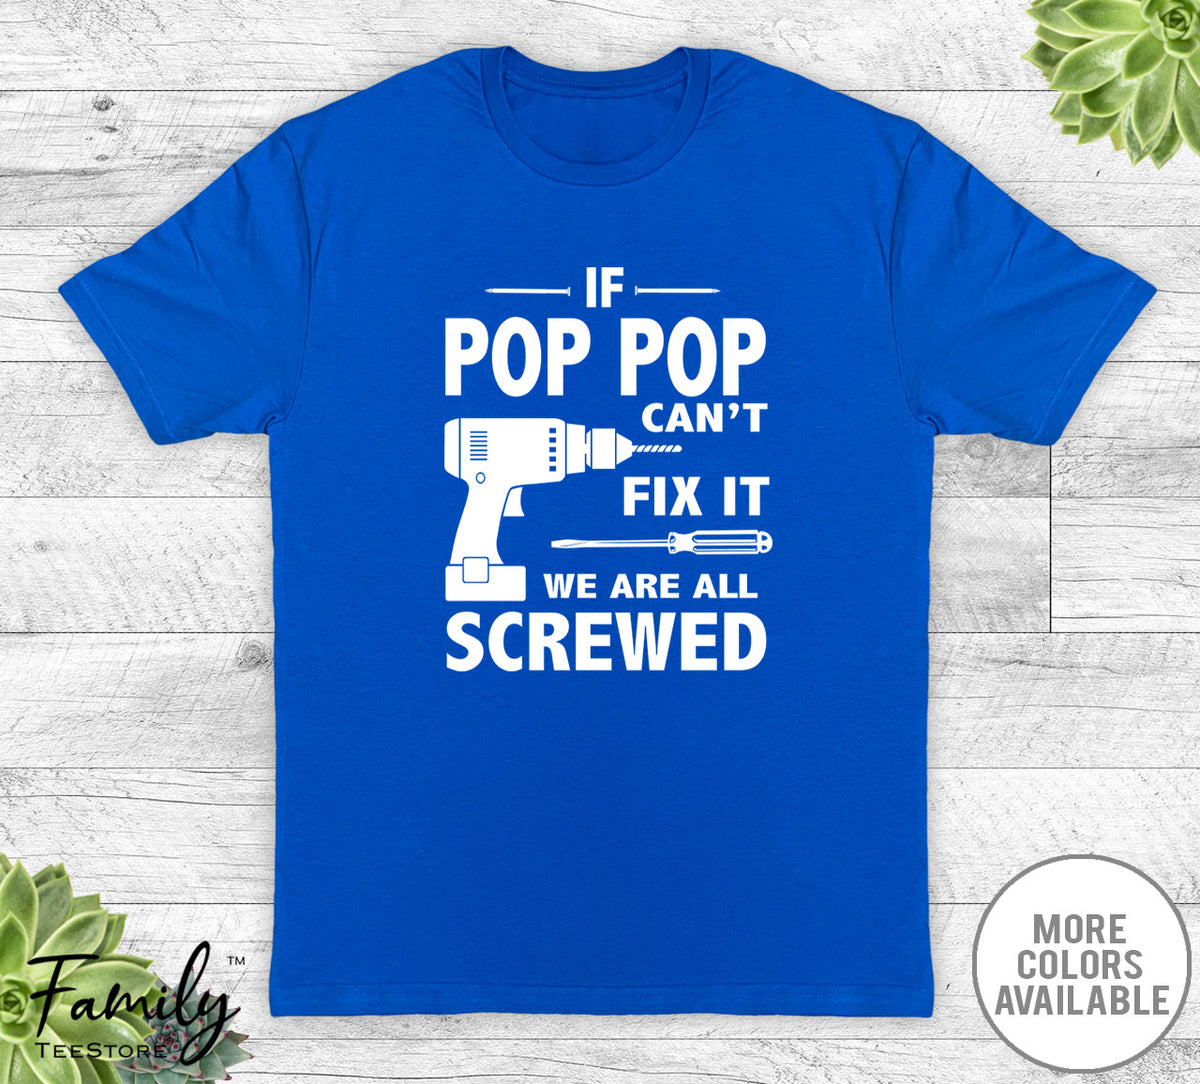 If Pop Pop Can't Fix It We Are All Screwed - Unisex T-shirt - Pop Pop Shirt - Pop Pop Gift - familyteeprints